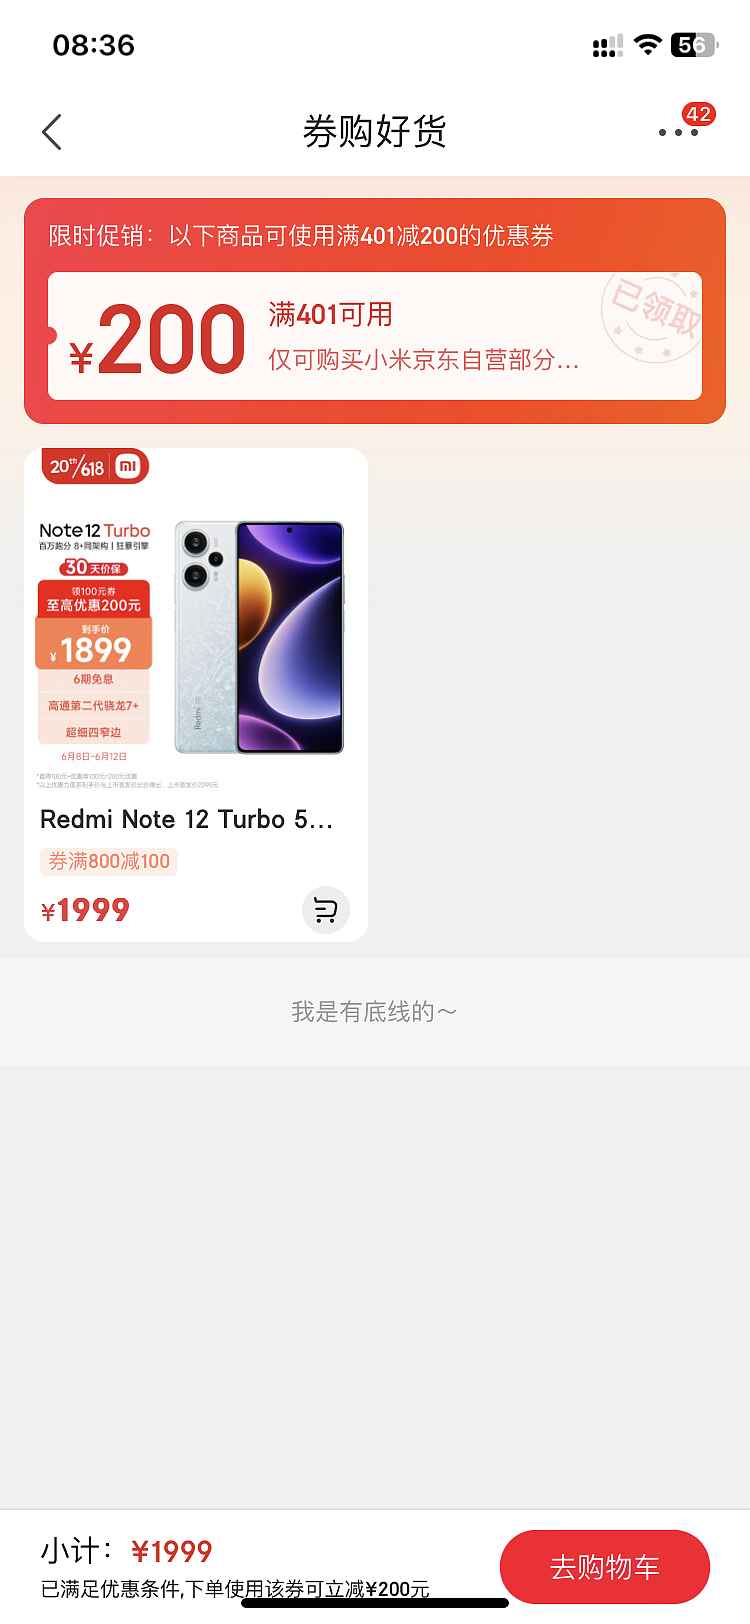 16G+1T 仅 2279 元 ：Redmi Note 12 Turbo 手机全系免息新低 + 补货 - 4